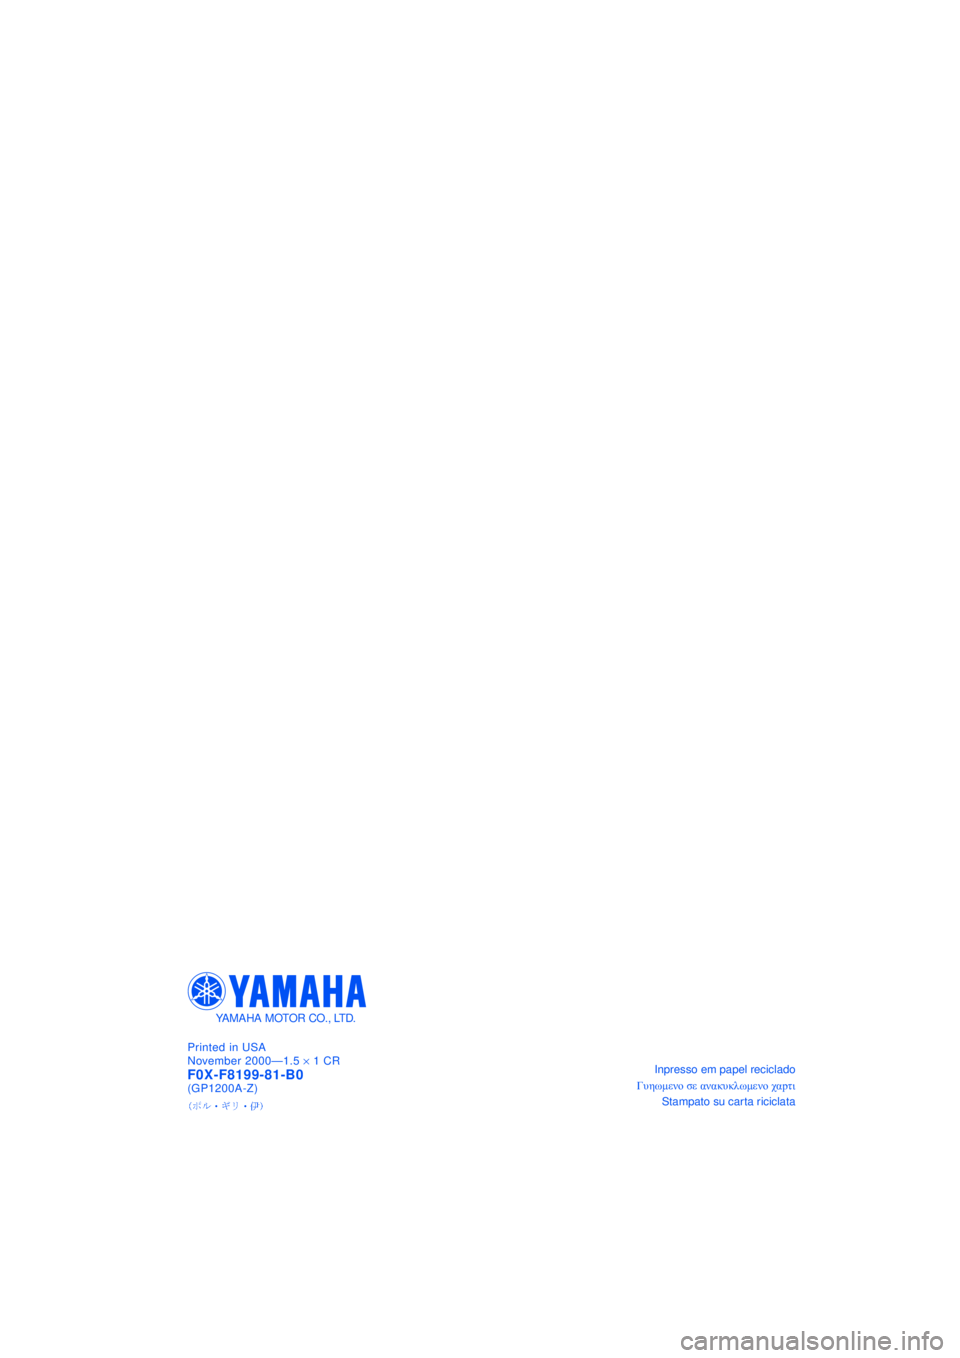 YAMAHA GP1200 2001  Manuale duso (in Italian) Inpresso em papel reciclado
+ #ç&â 0á  #10 #. á. ä#äã&â 0á  #$ . S2å
Stampato su car ta riciclata
Printed in USA
November 2000—1.5 
´ 1 CRF0X-F8199-81-B0(GP1200A-Z)
YAMAHA MOTOR CO., LTD.